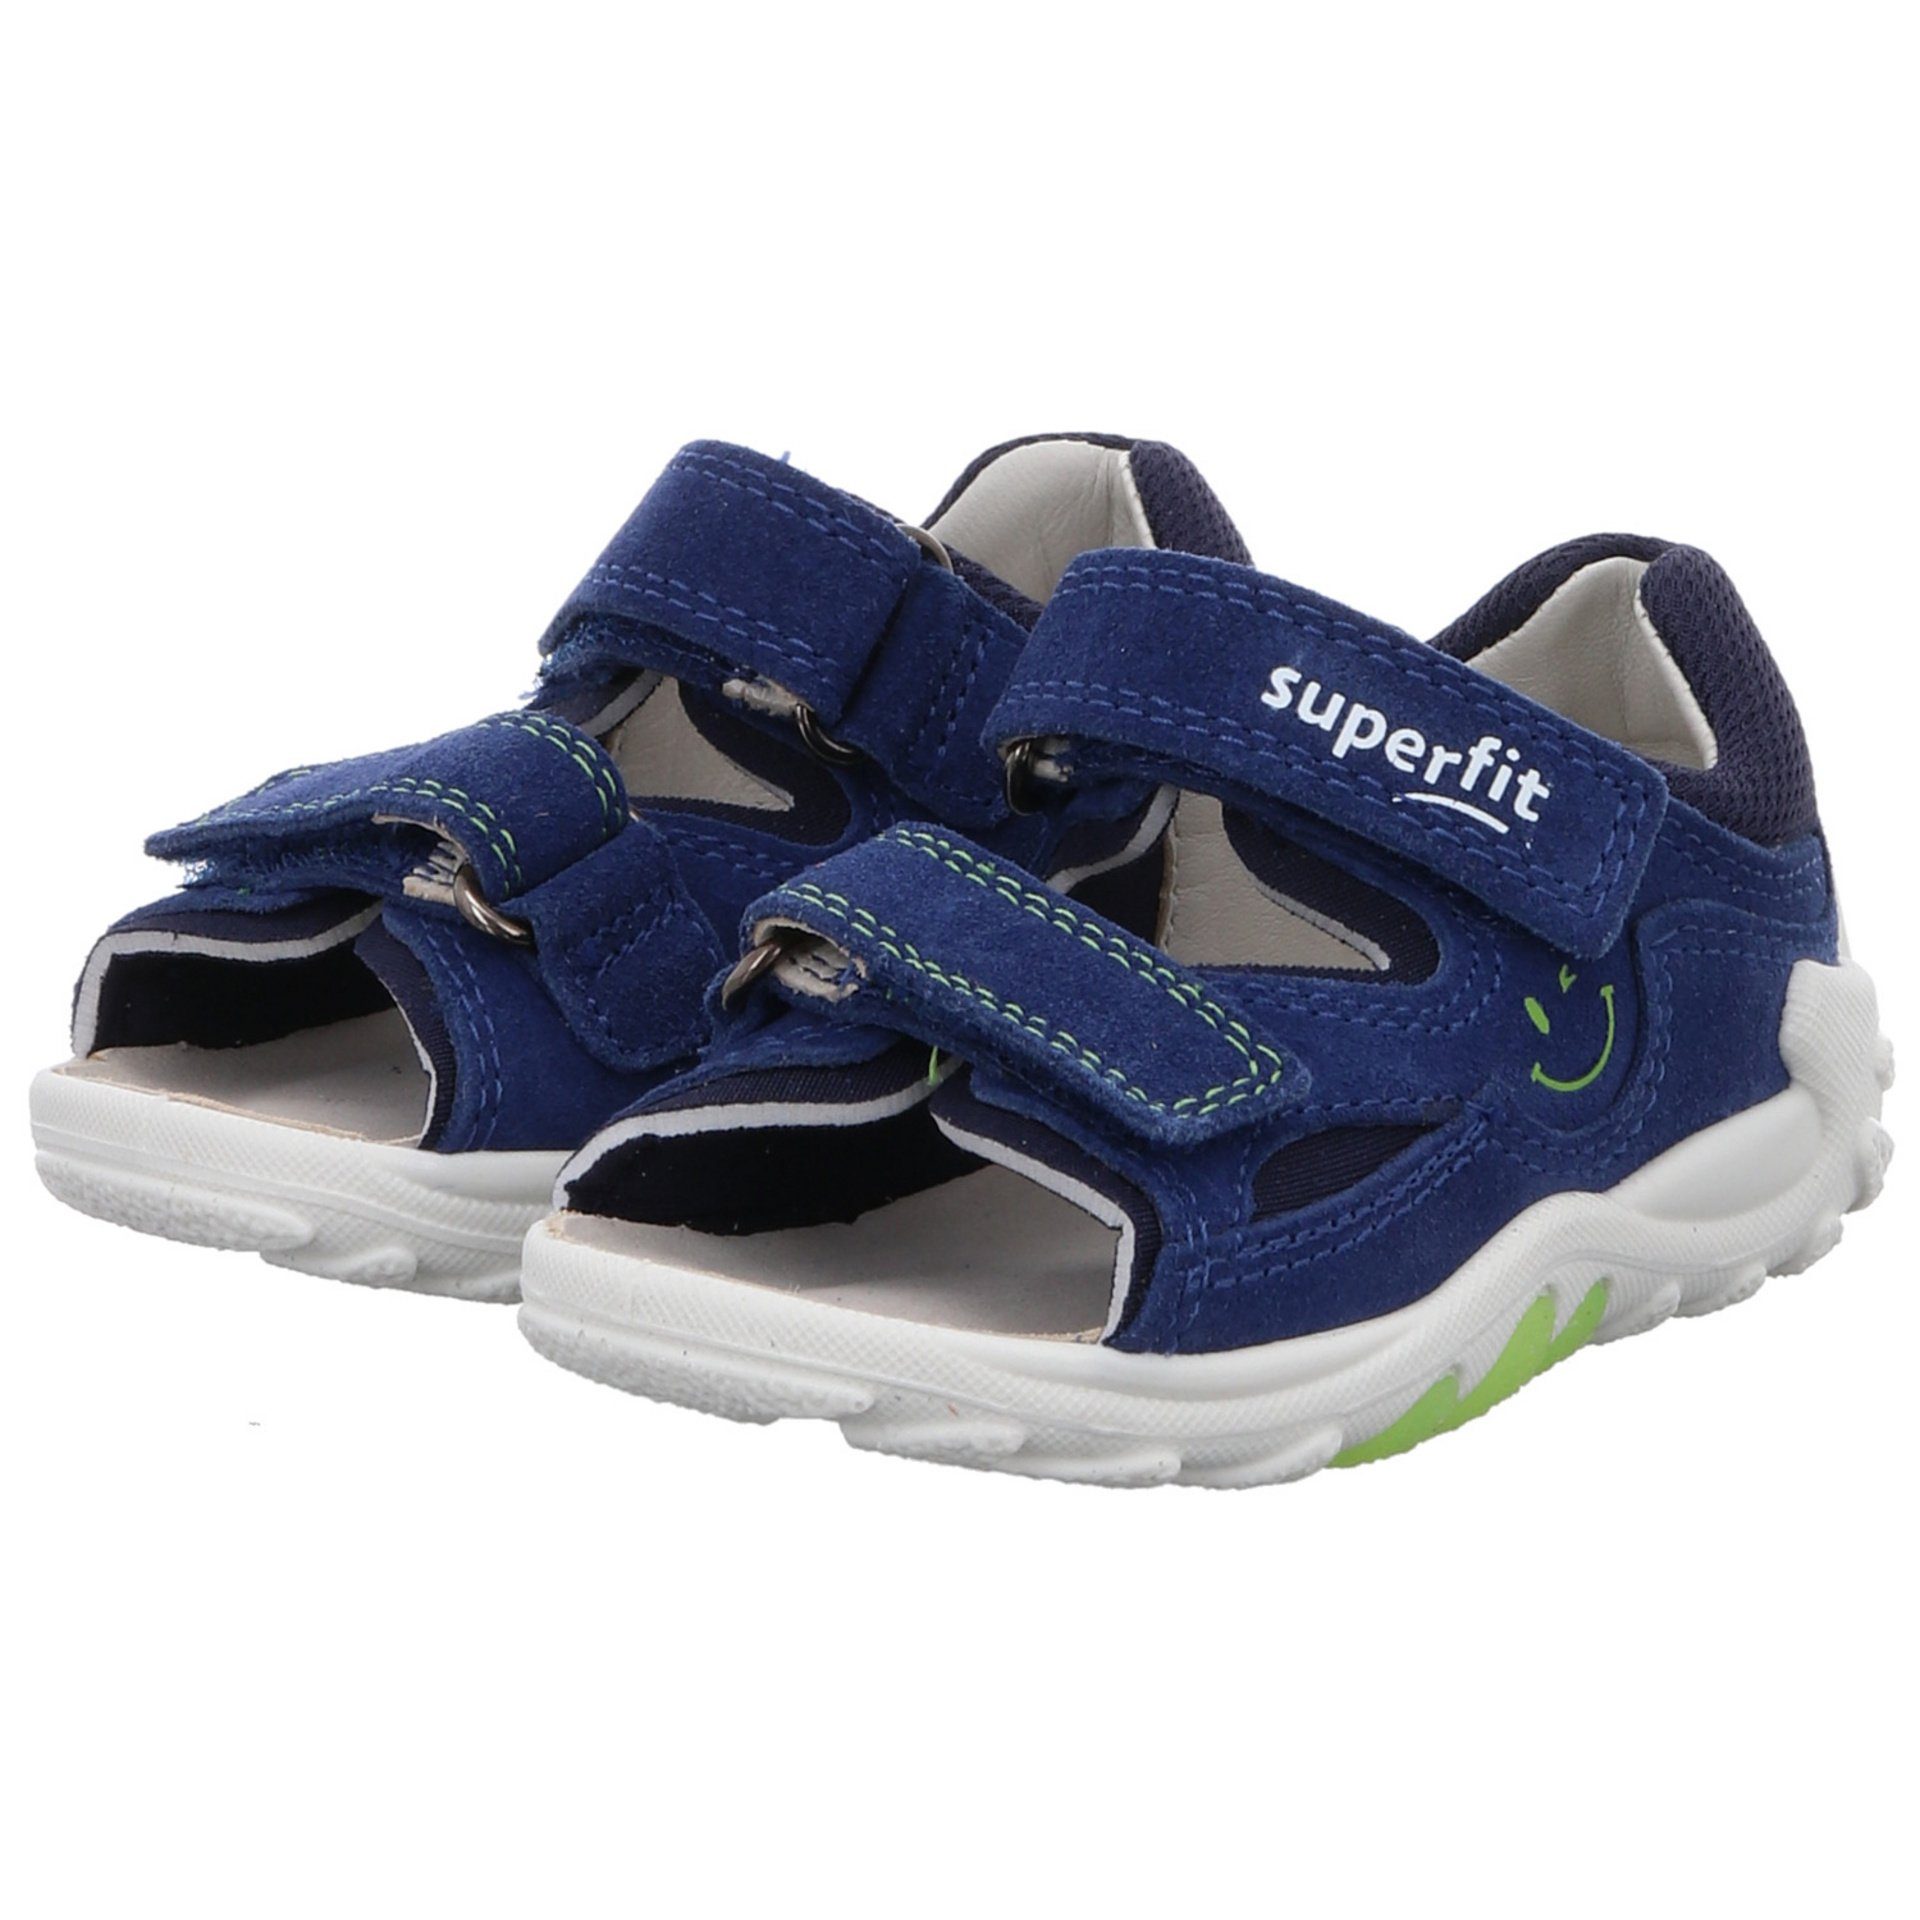 Superfit Jungen Sandalen Schuhe Flow Kinderschuhe BLAU/HELLGRÜN Sandale Leder-/Textilkombination Sandale